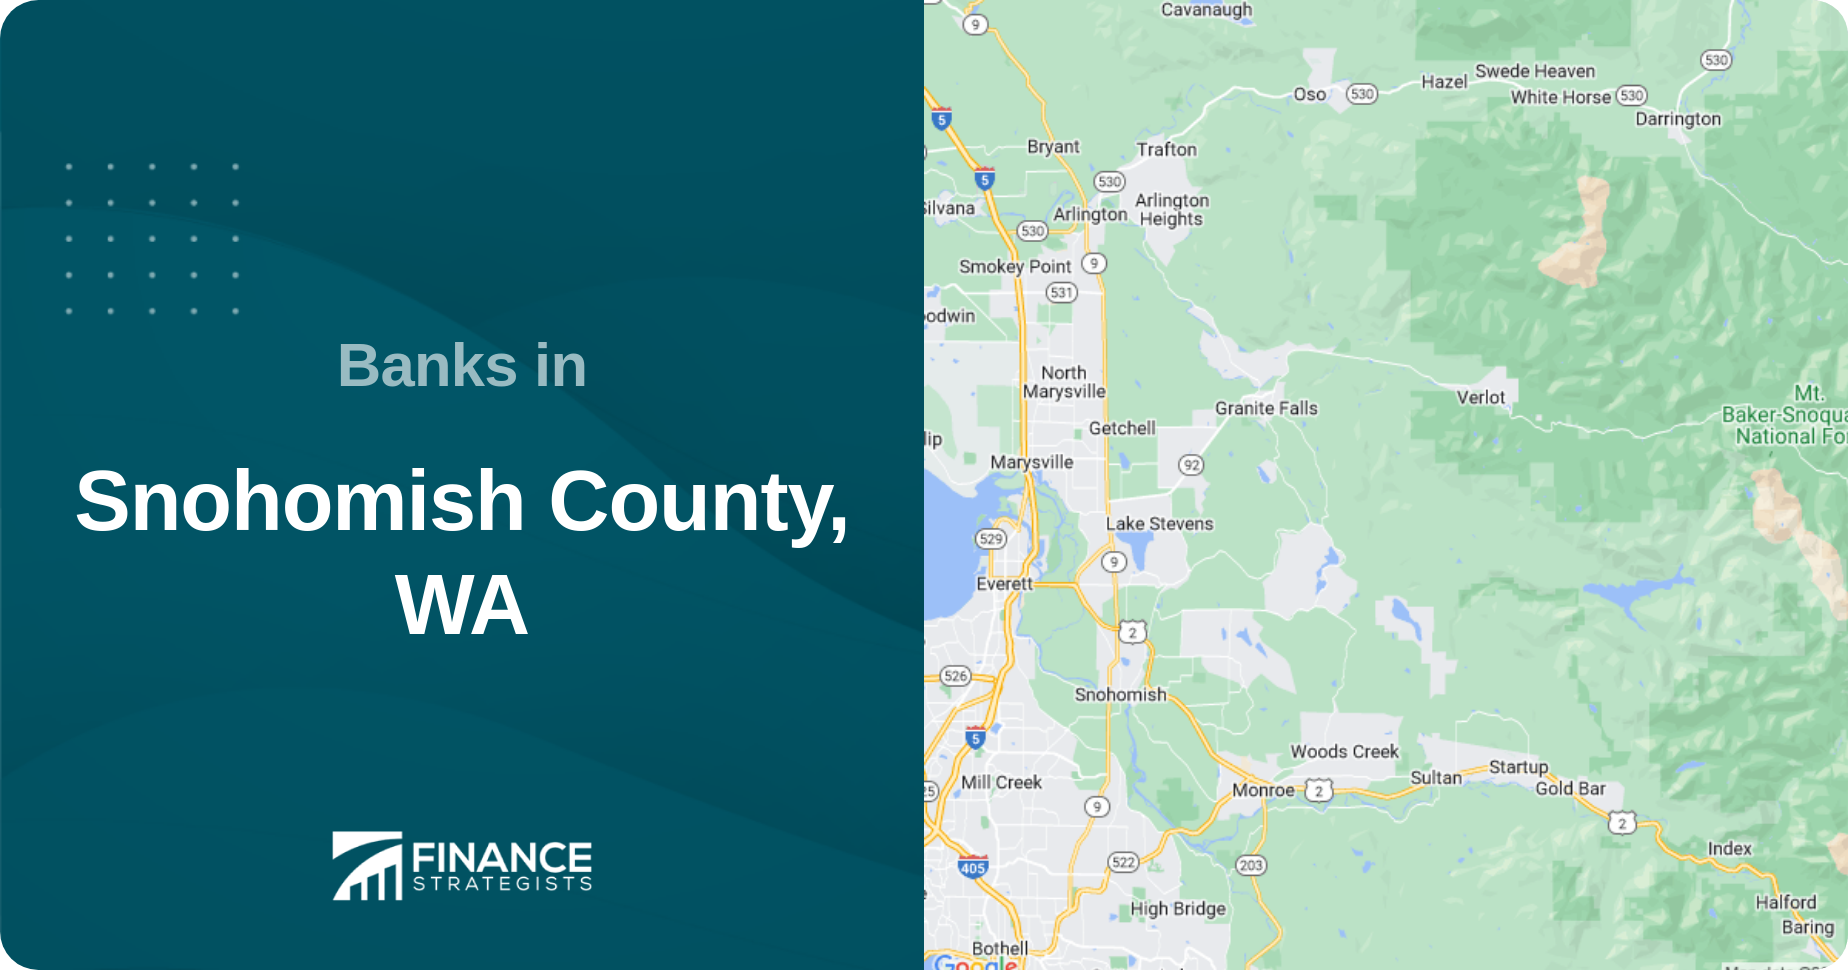 Banks in Snohomish County, WA